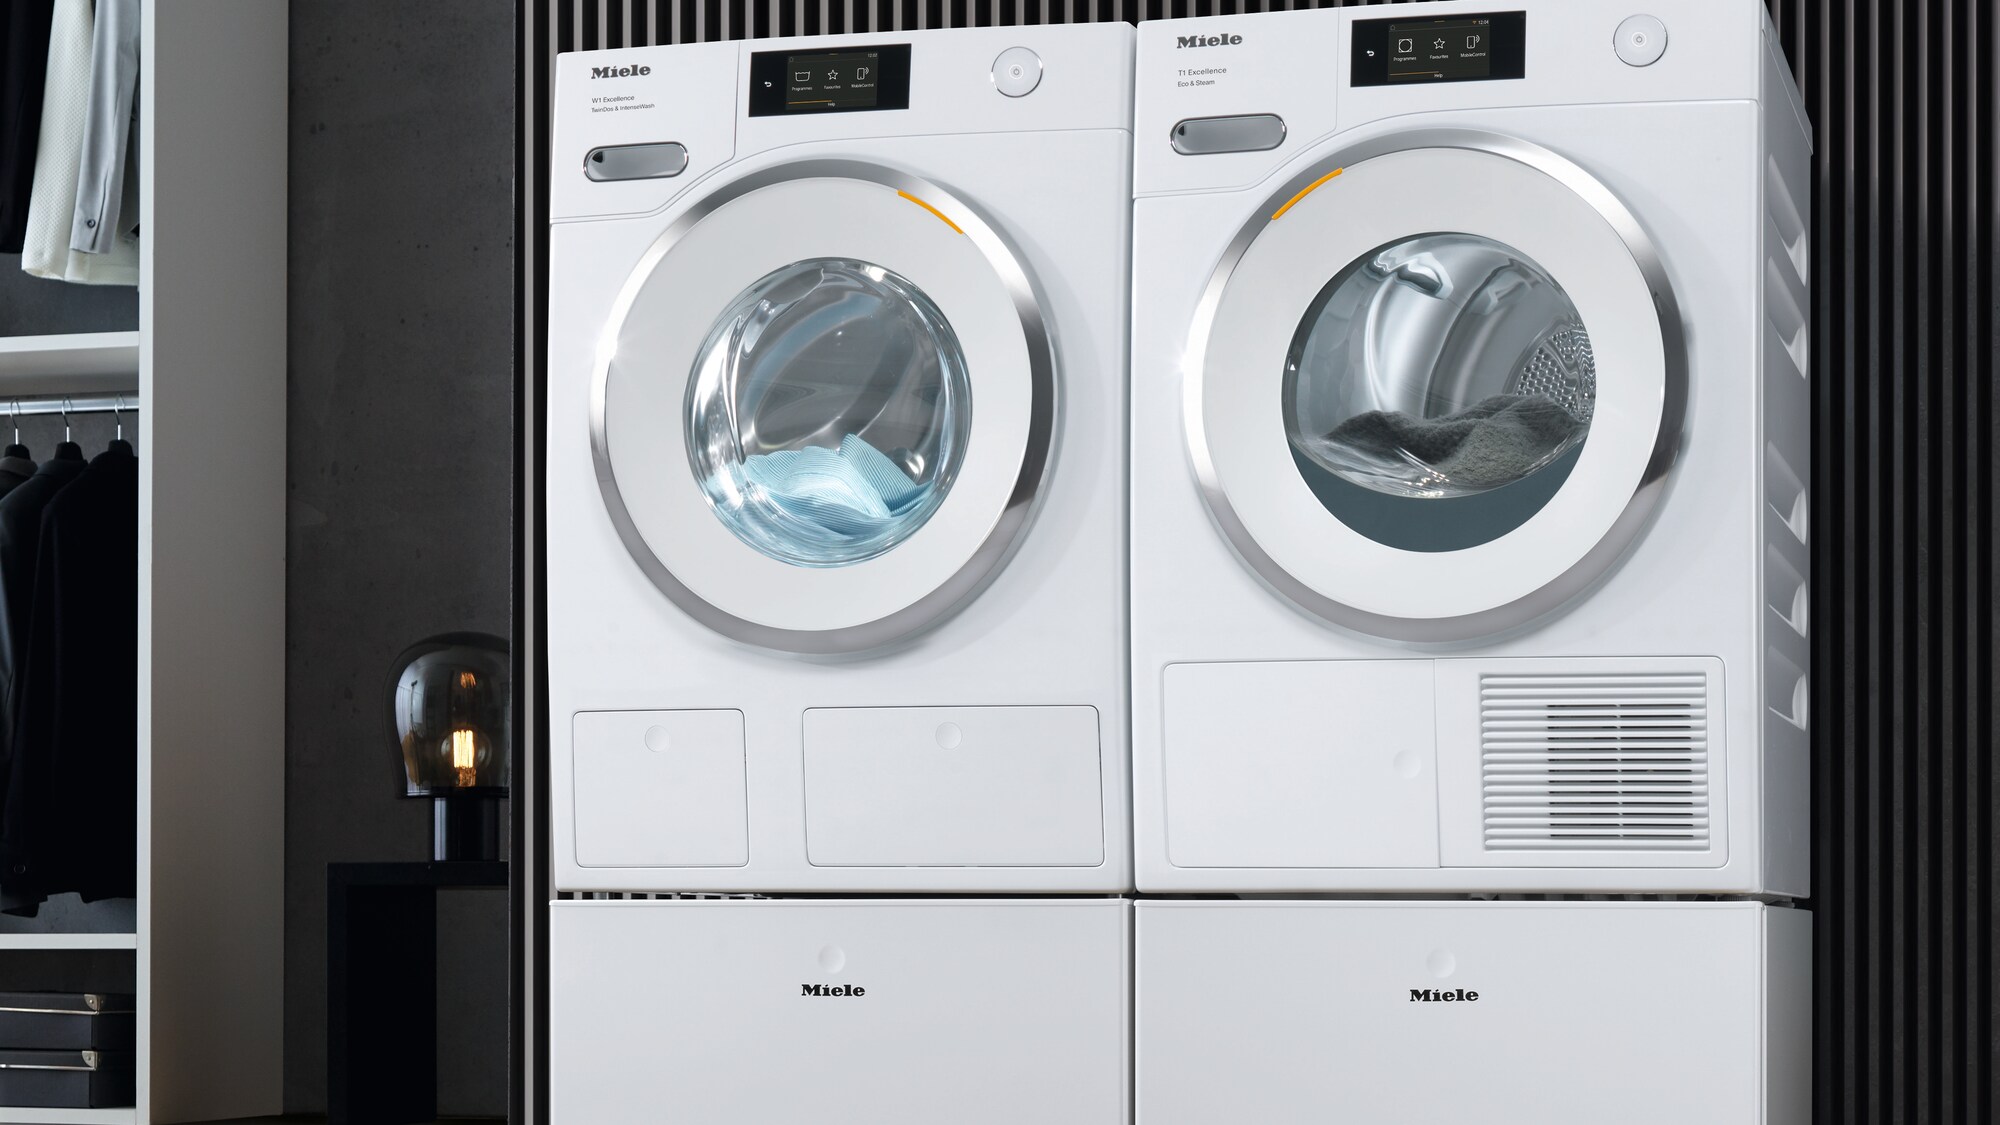 Miele Washing Machines: A Comprehensive